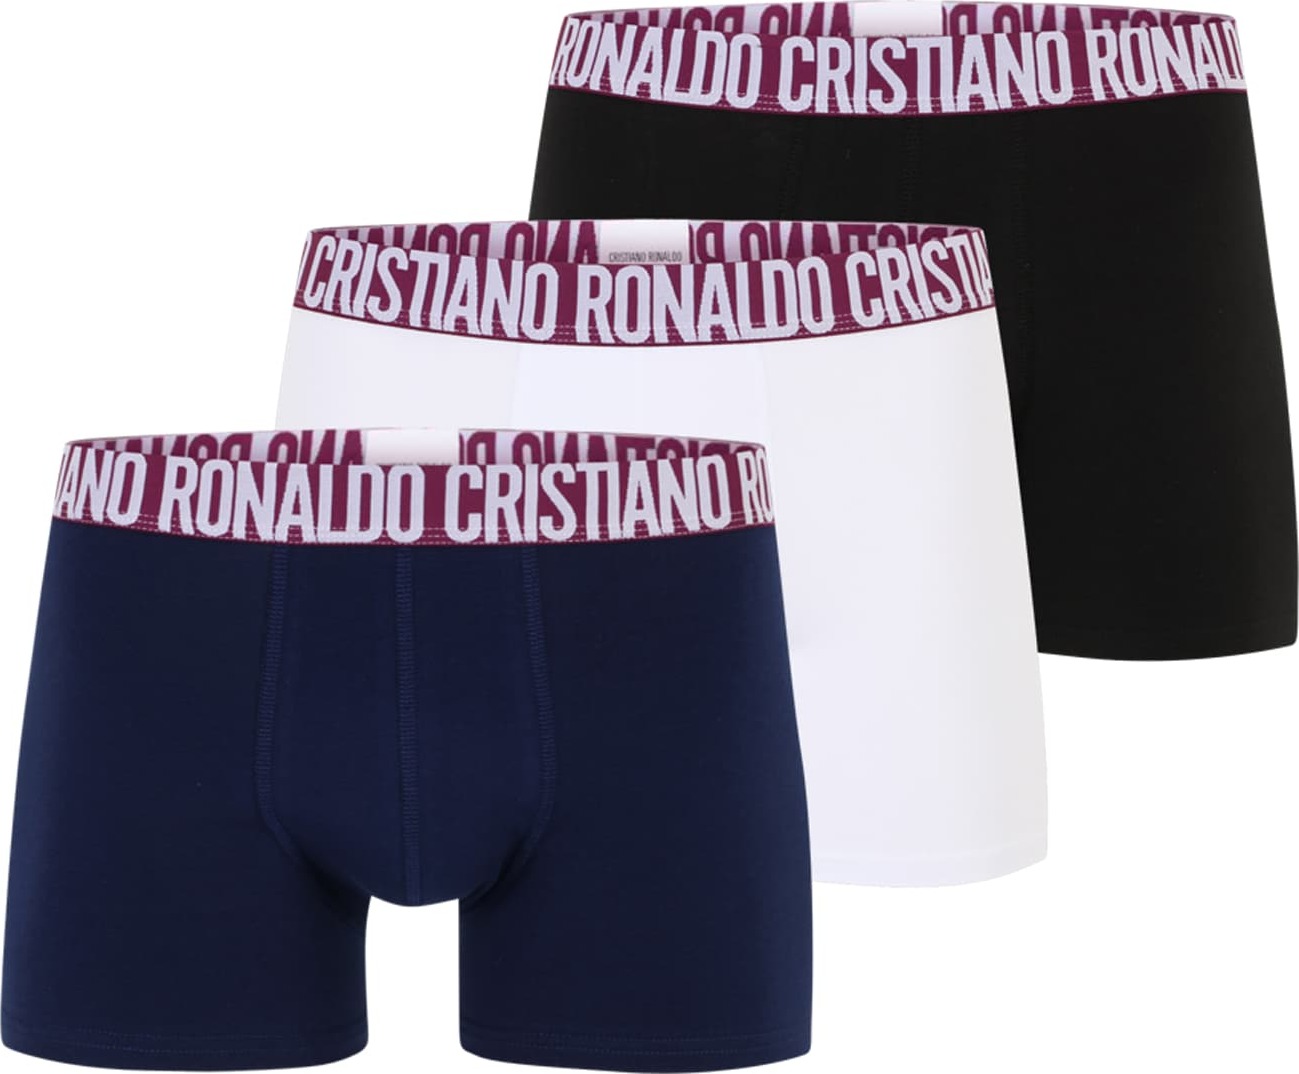 CR7 - Cristiano Ronaldo Boxerky noční modrá / červenofialová / černá / bílá